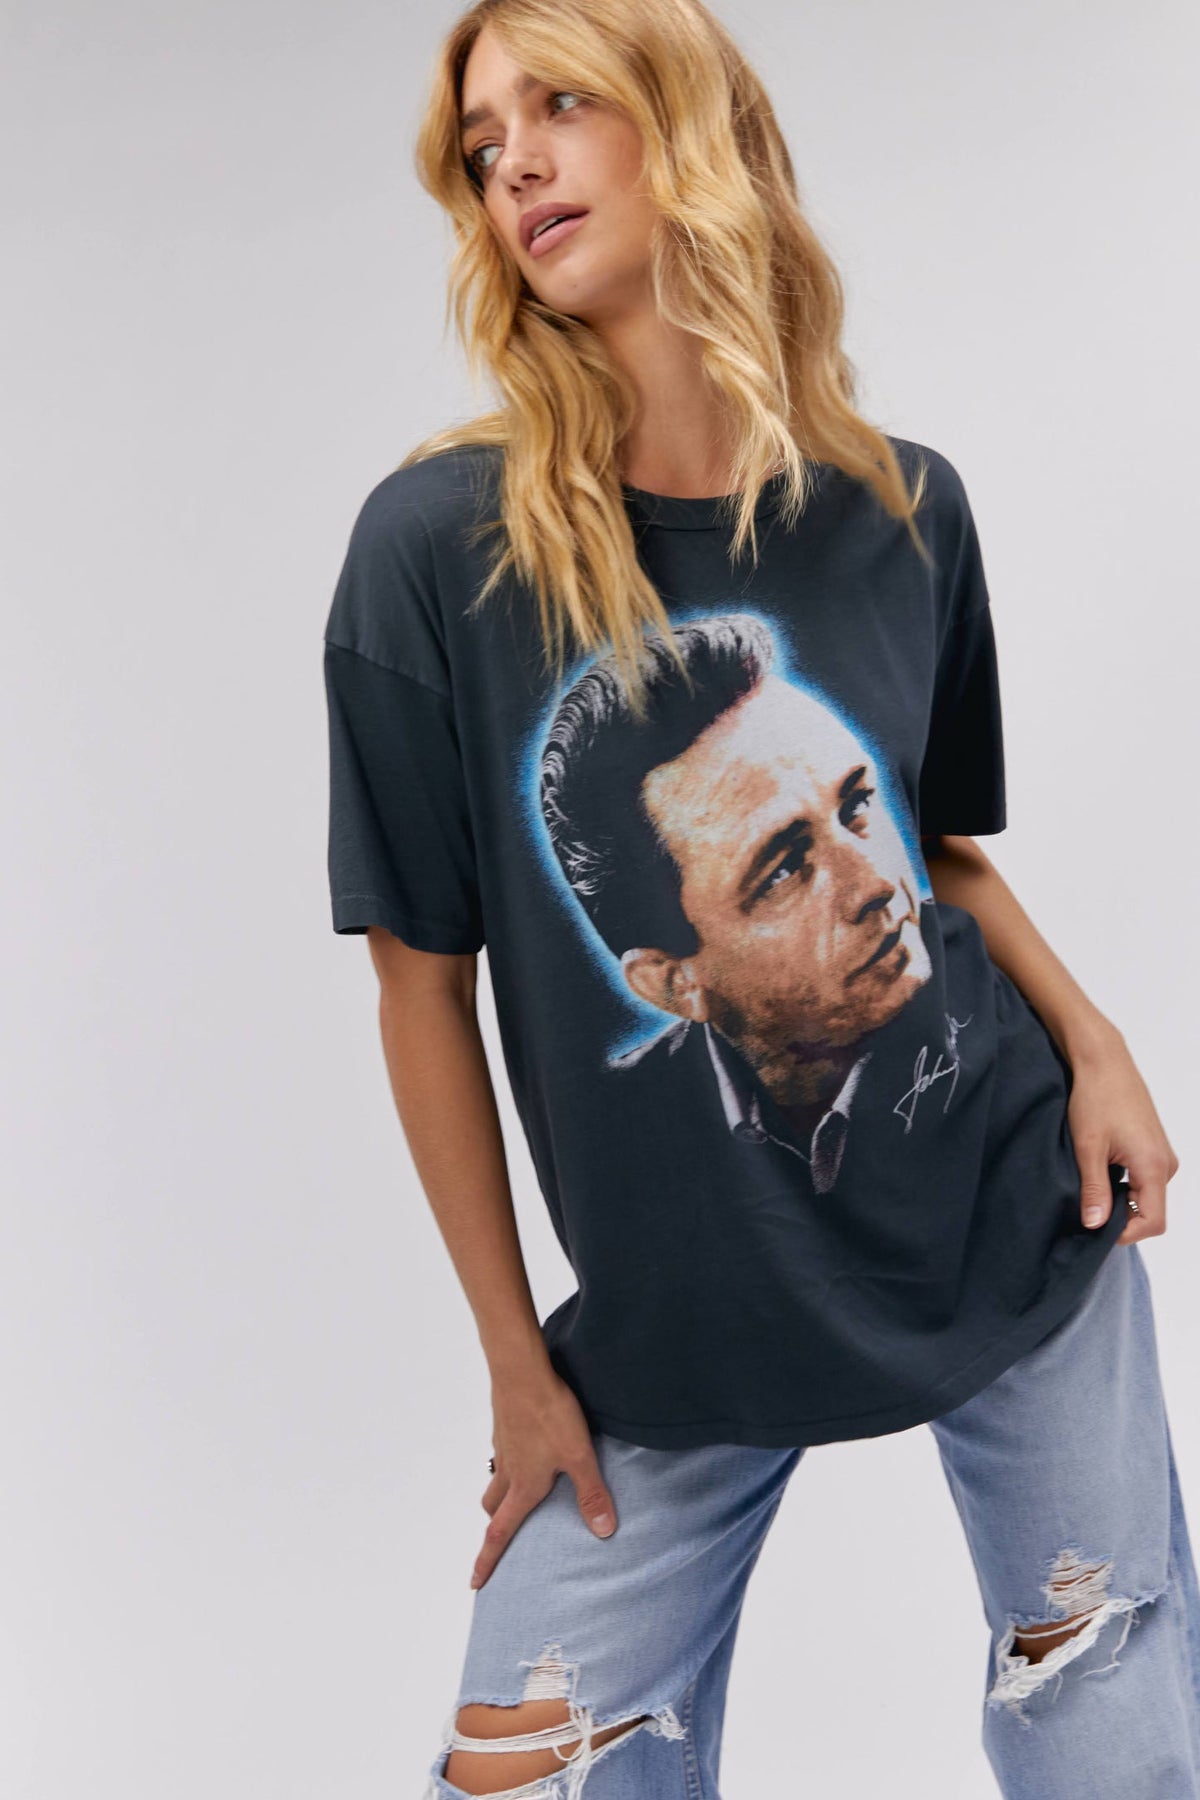 Daydreamer Johnny Cash Potrait Merch Boyfriend Tee T Shirt